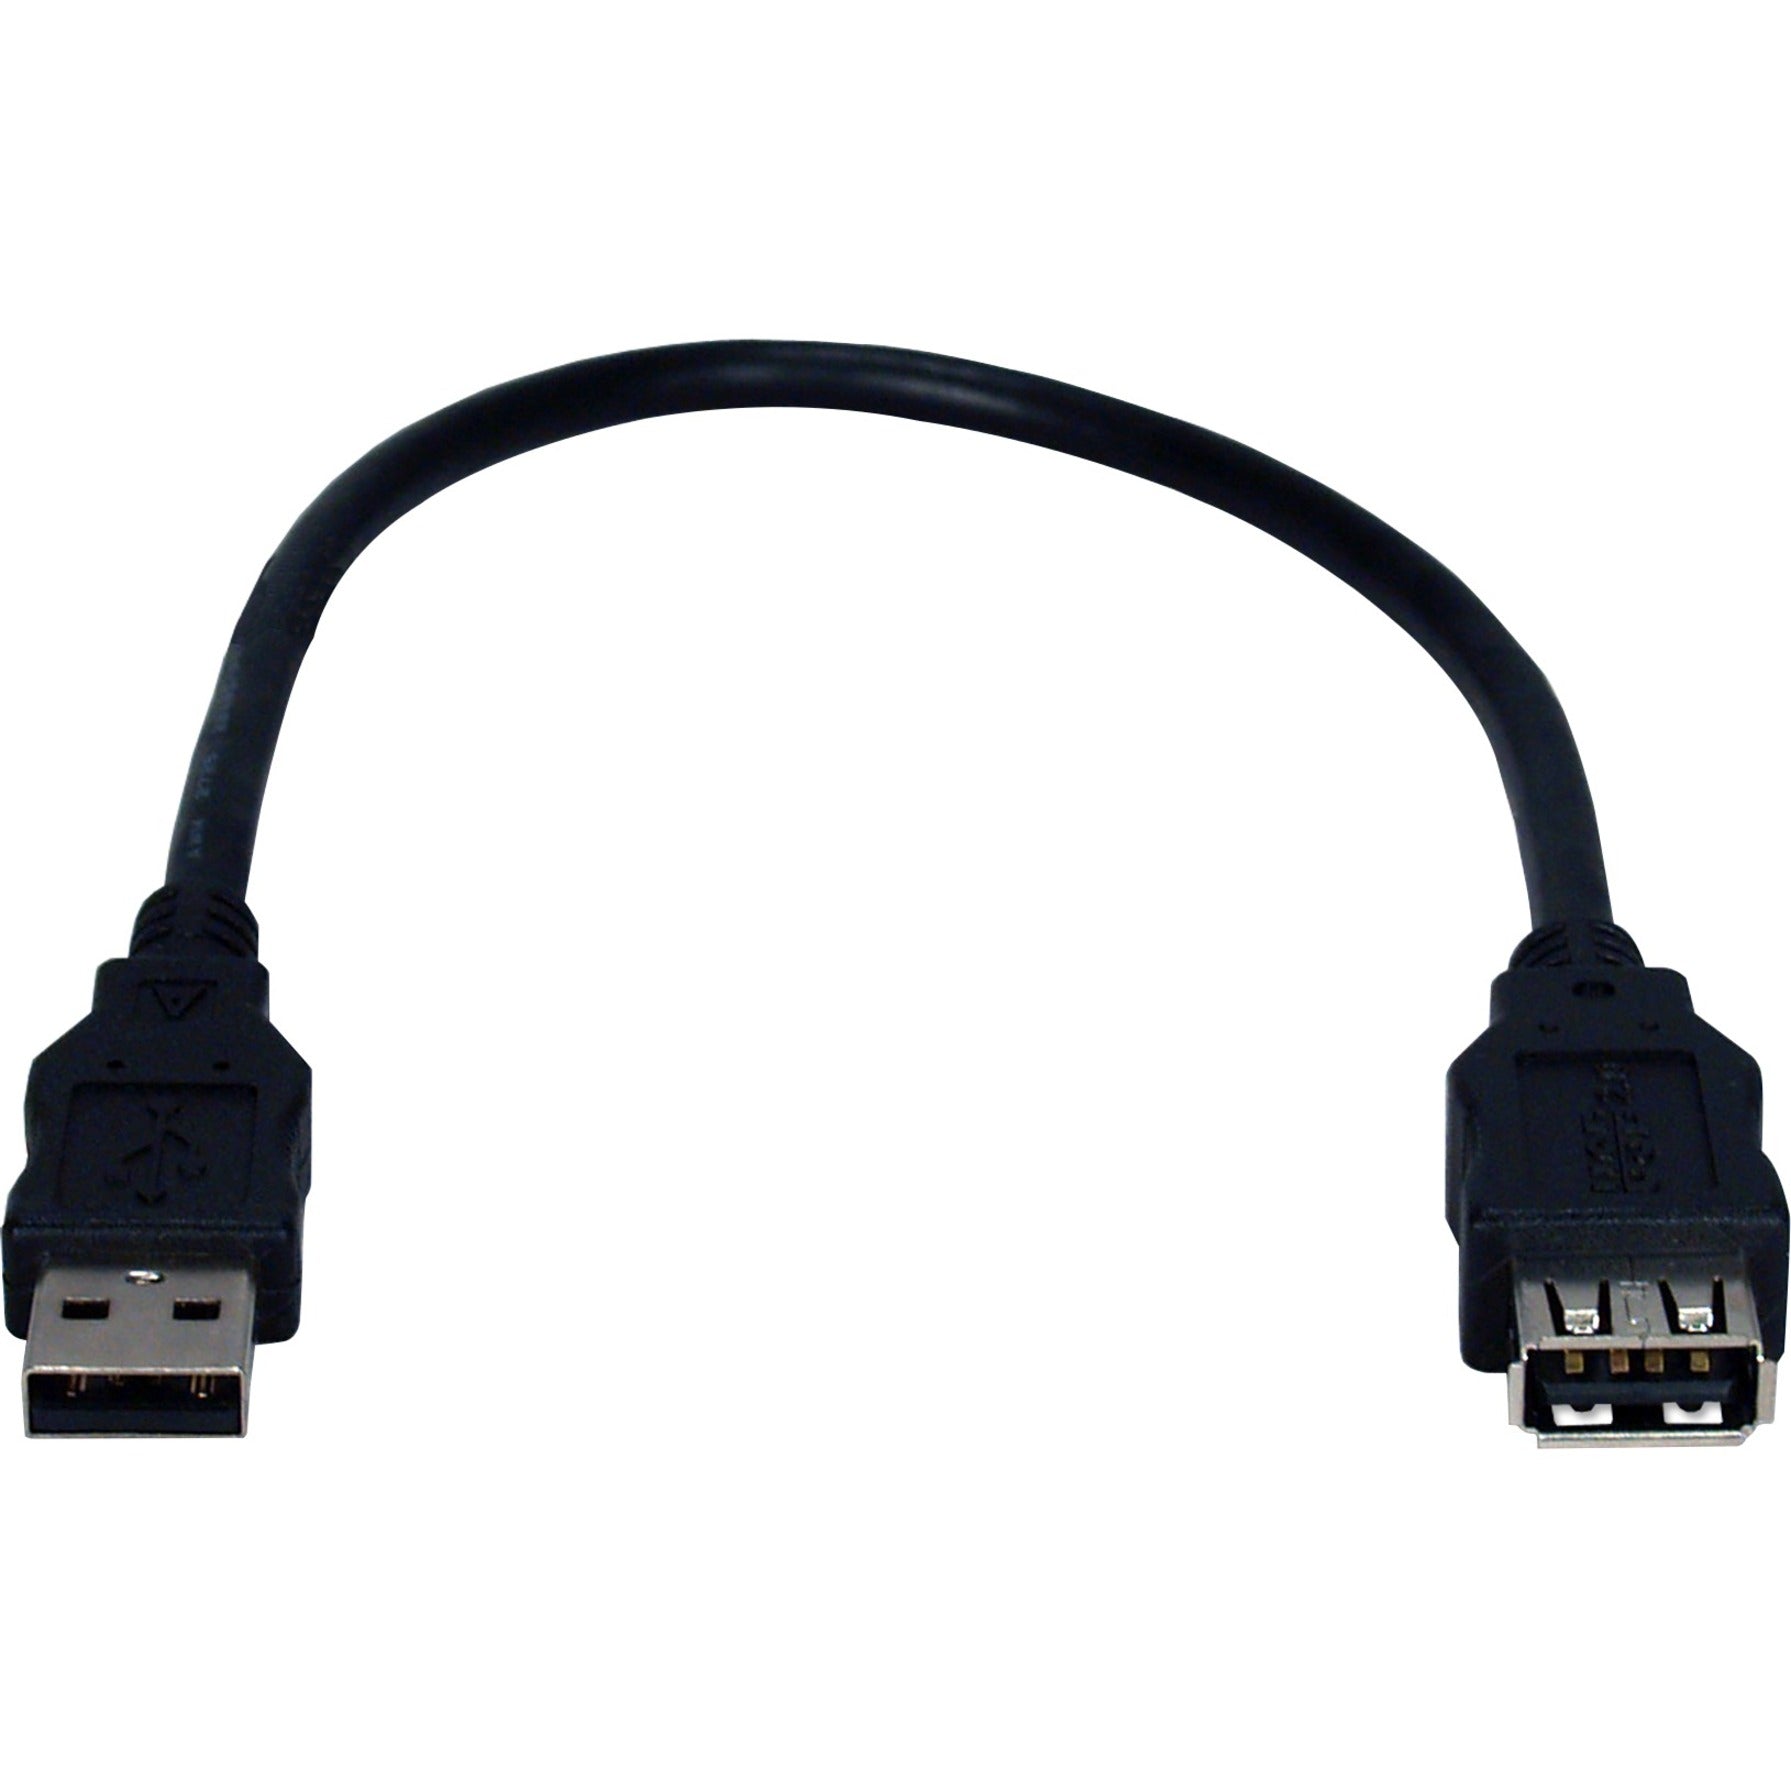 QVS CC2210C-01 USB 2.0 High-Speed Extension Cable, 1ft, Black